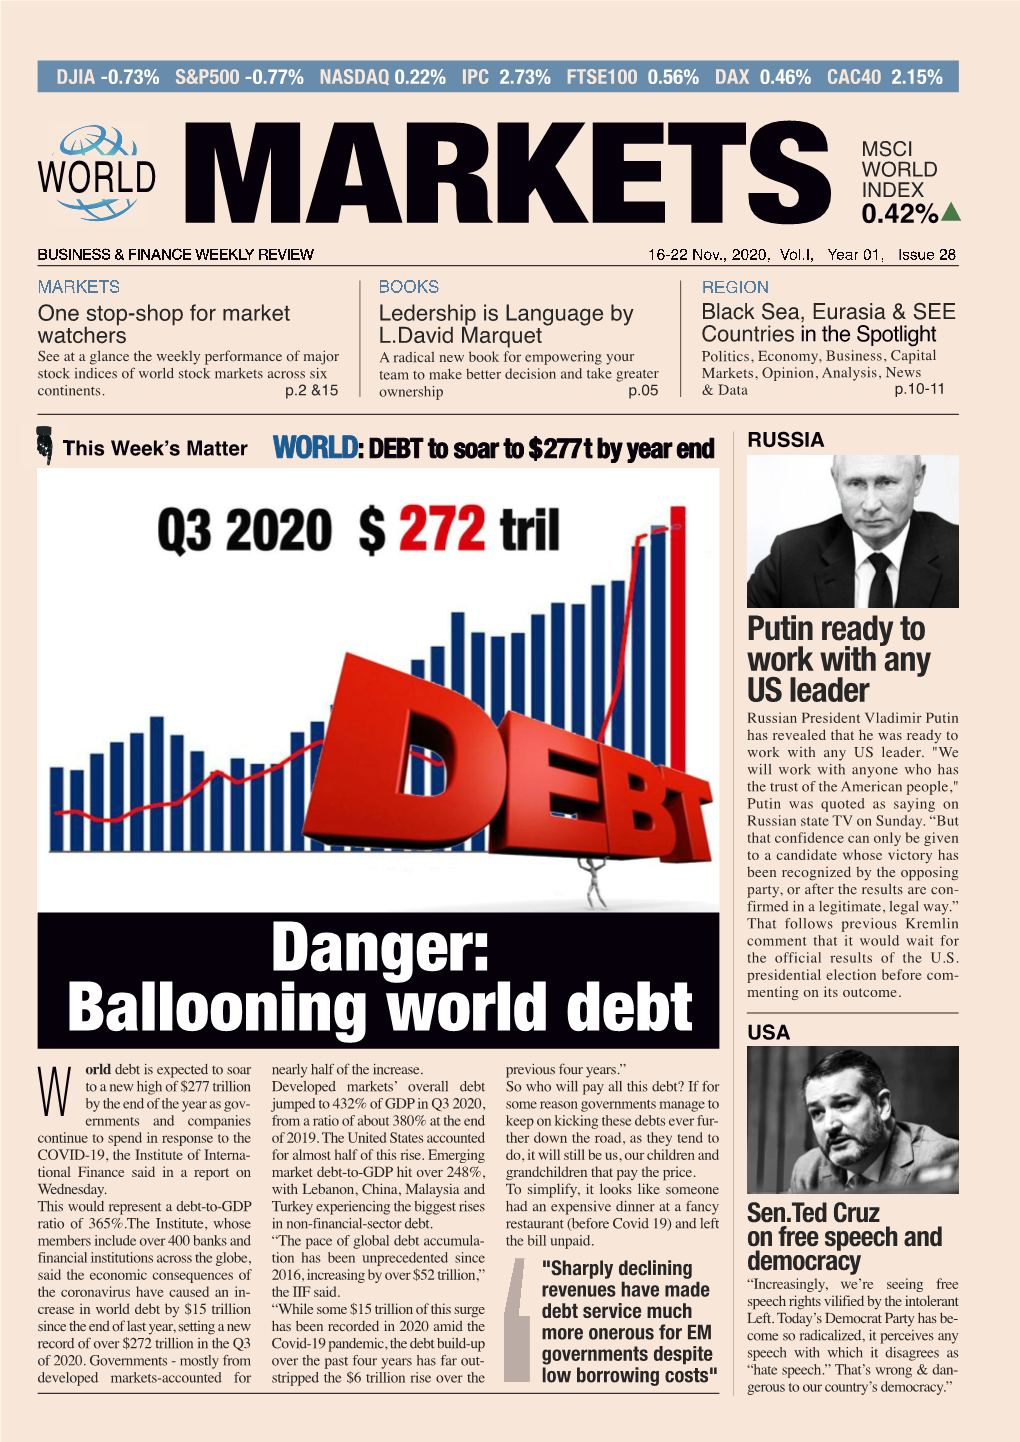 W Danger: Ballooning World Debt